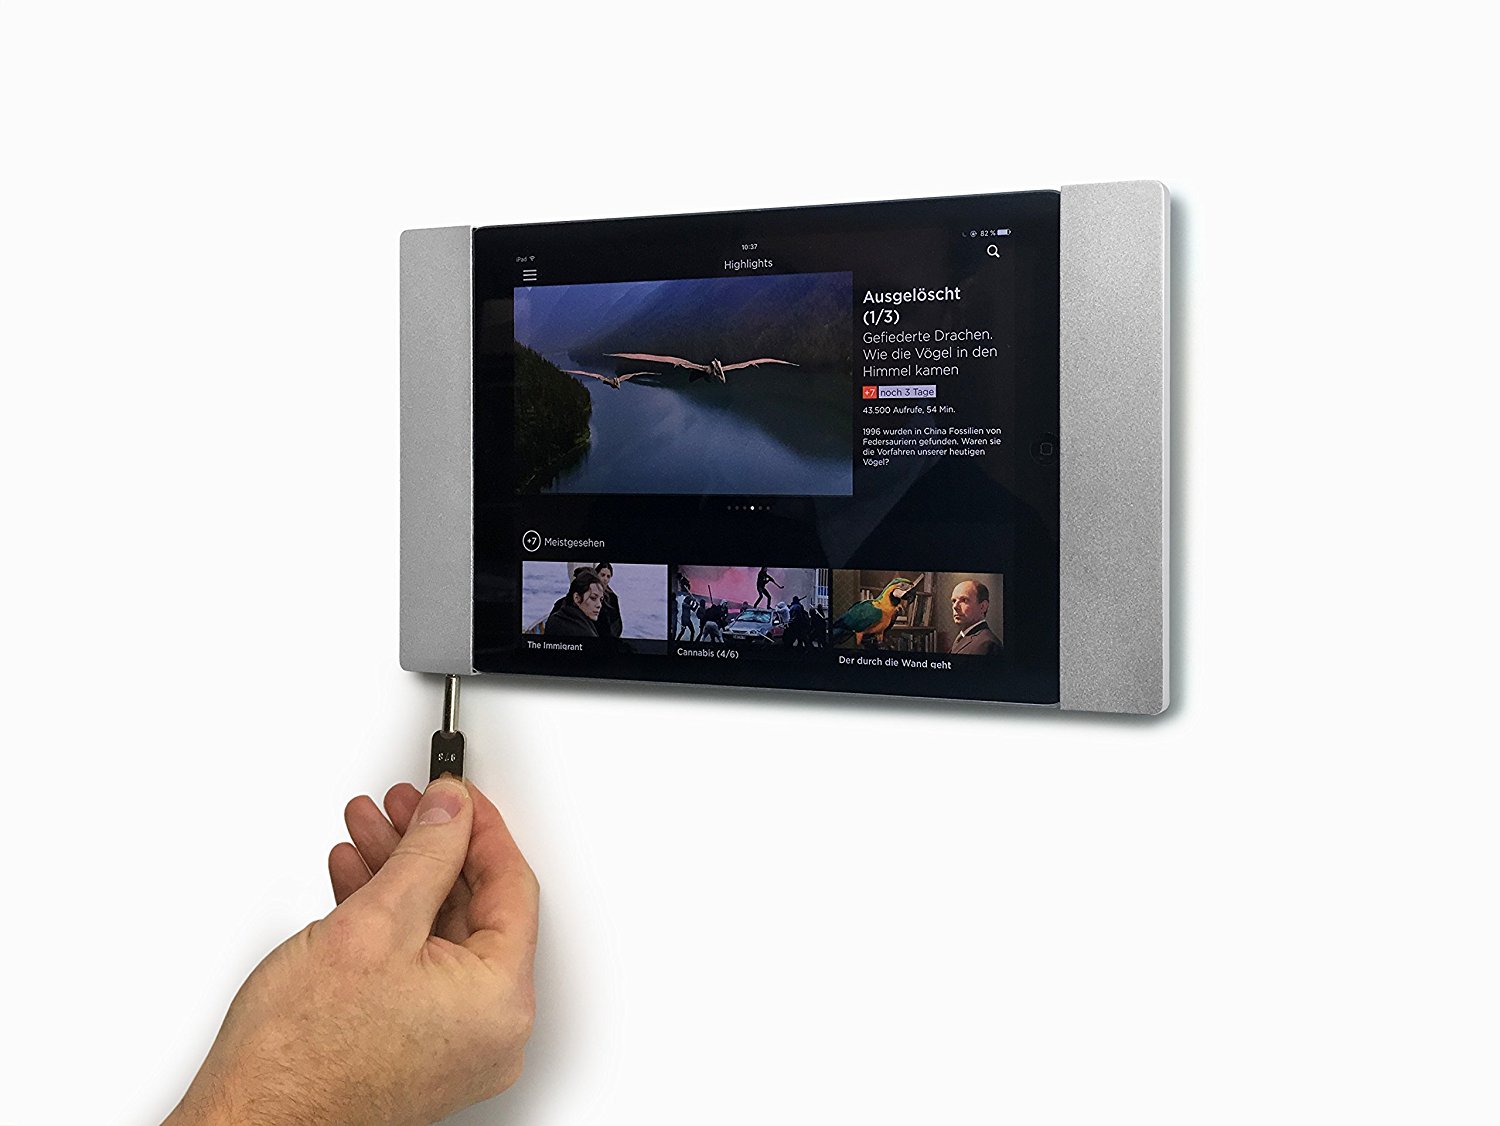 smart things sDock Fix Air s11 - schwarz -  Wandhalterung/Ladestation mit Lightning-Dock für iPad Air 1, 2, iPad Pro 9,7, iPad 2017/2018